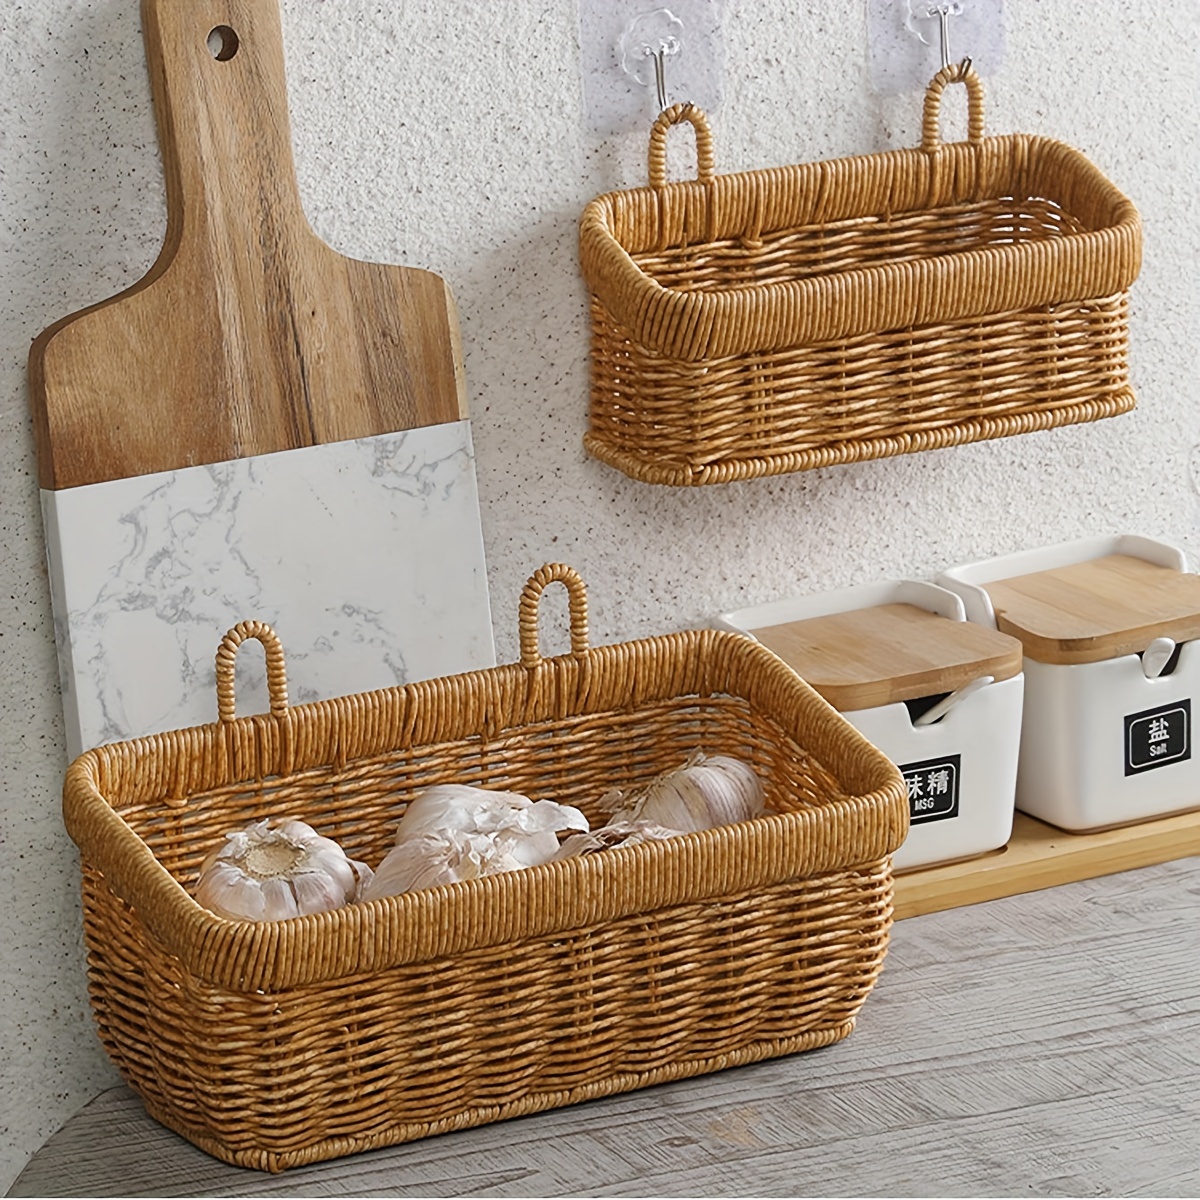 Onlytak Plastic Wicker Storage Baskets, Baskets for Shelves, Toilet Paper  Storage Baskets, Woven Storage Baskets for Organizing, Caramel Orange, 12  x